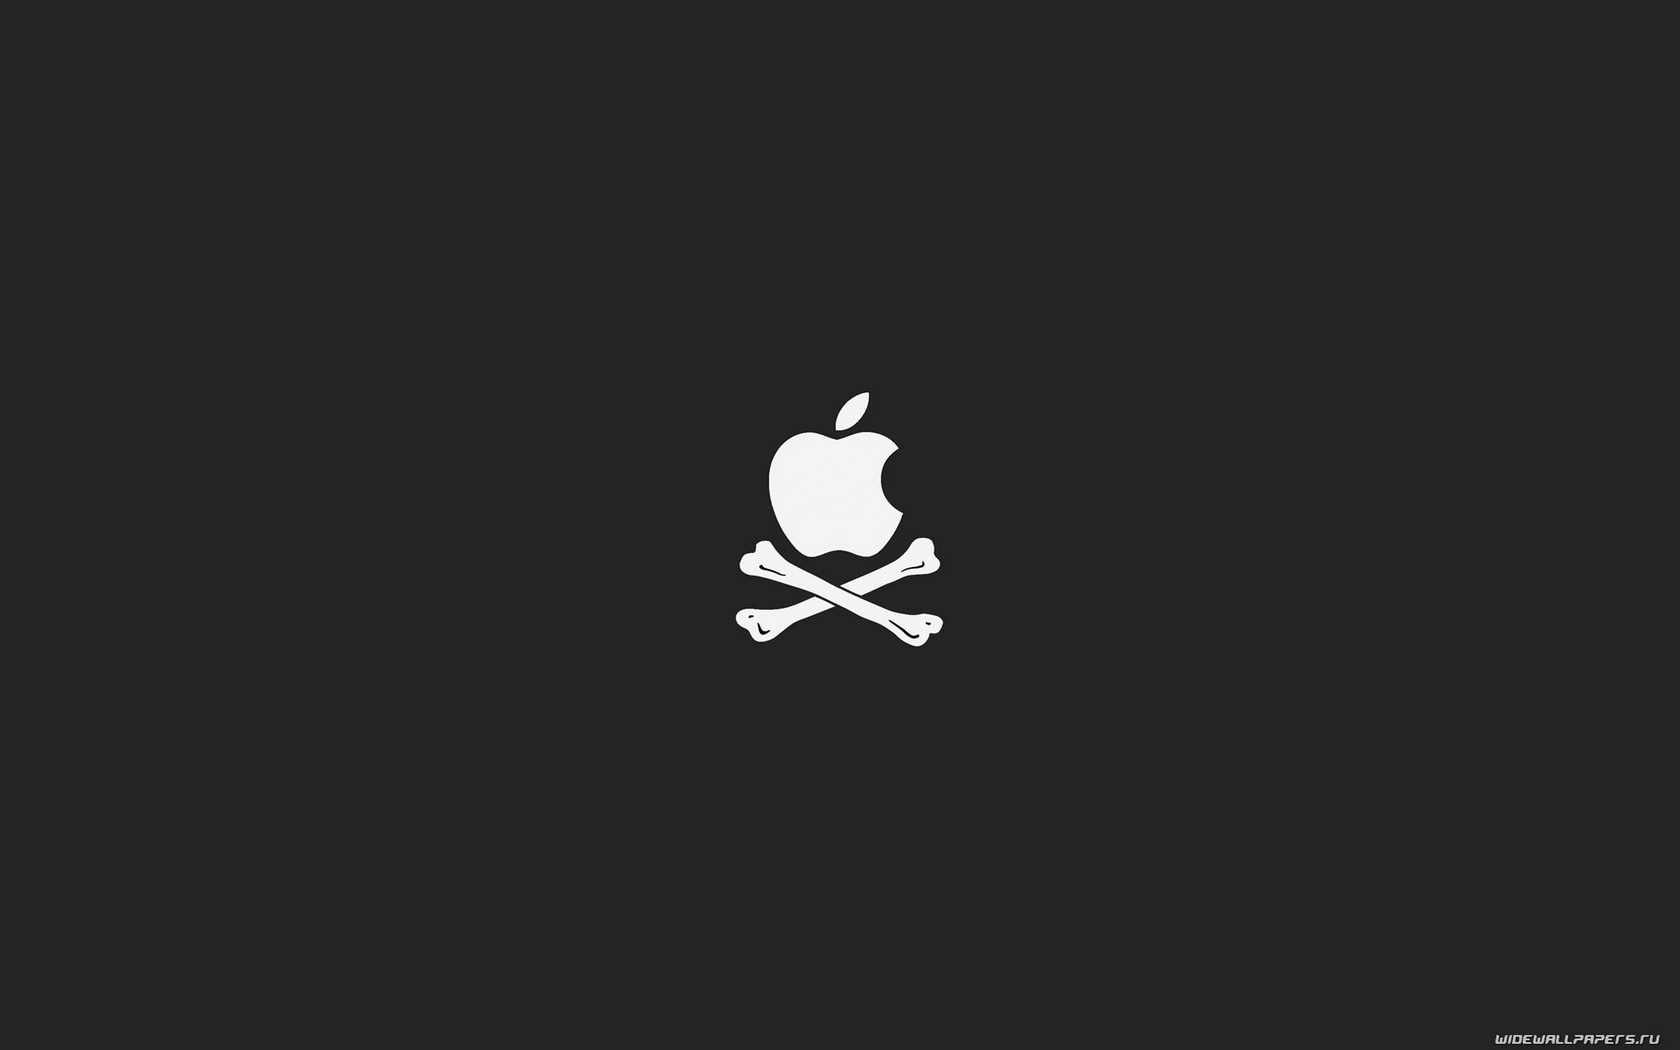 Handy-Wallpaper Marken, Piraten, Logos, Apple, Humor kostenlos herunterladen.